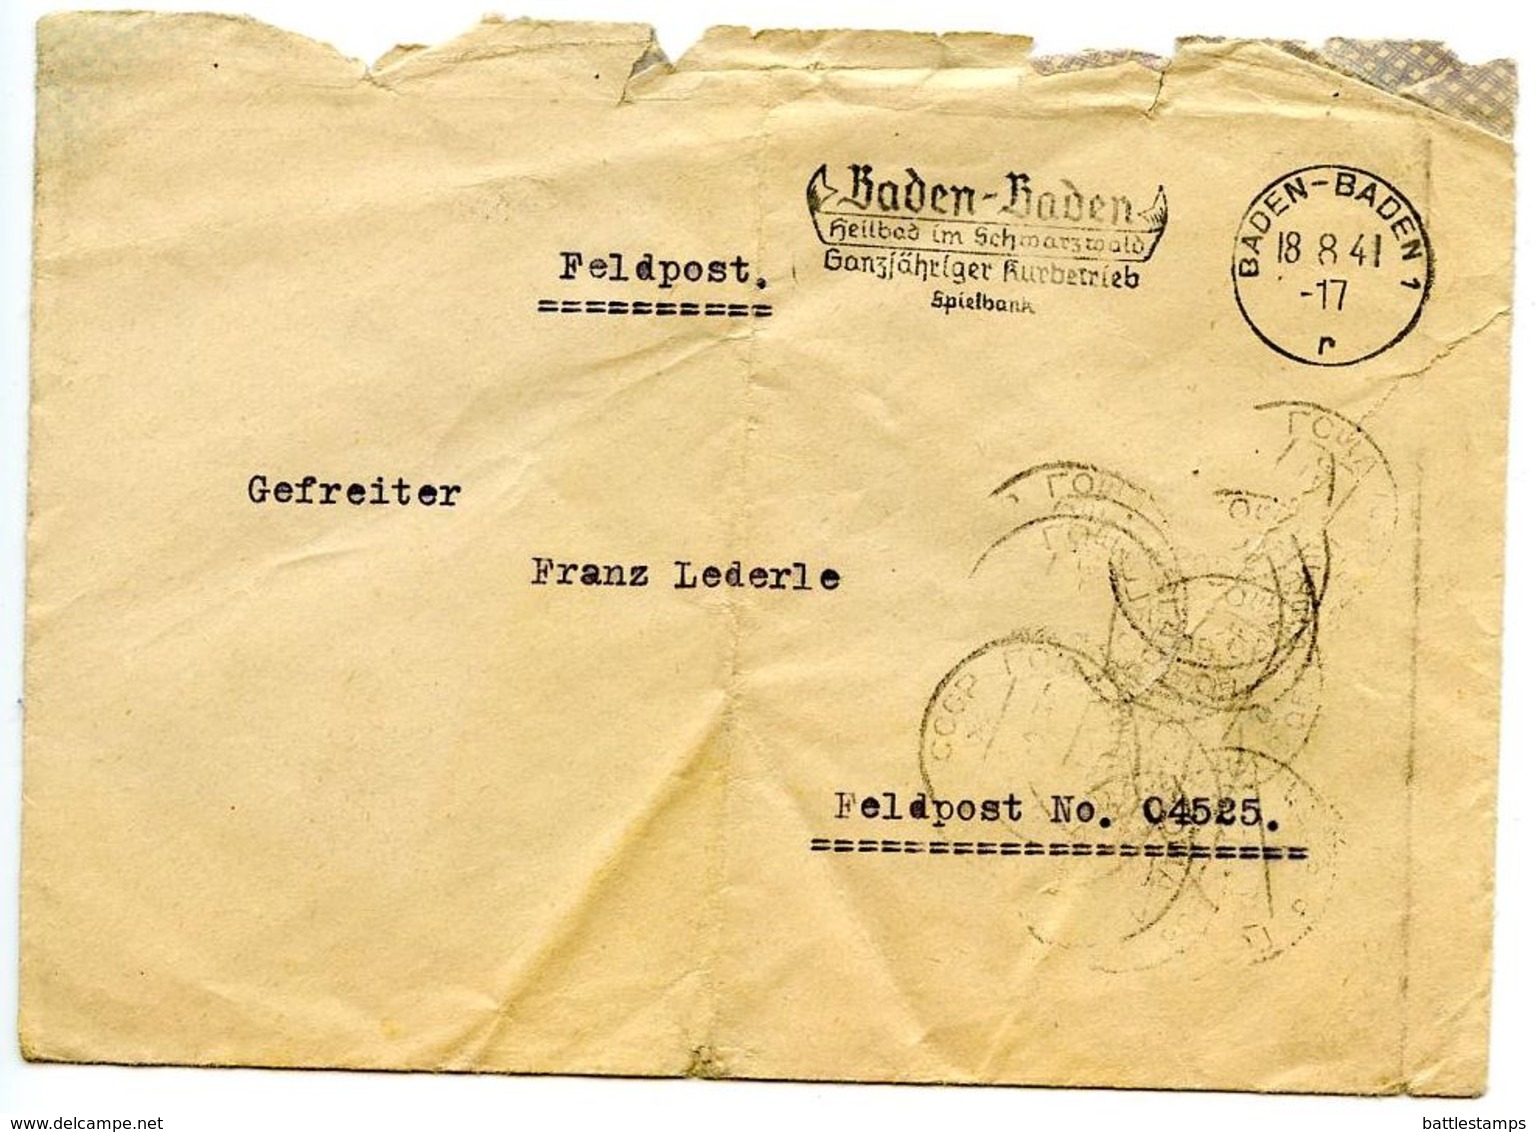 Germany 1941 WWII Cover Baden-Baden To Feldpost 04525 W/ Soviet Postmarks - Feldpost World War II